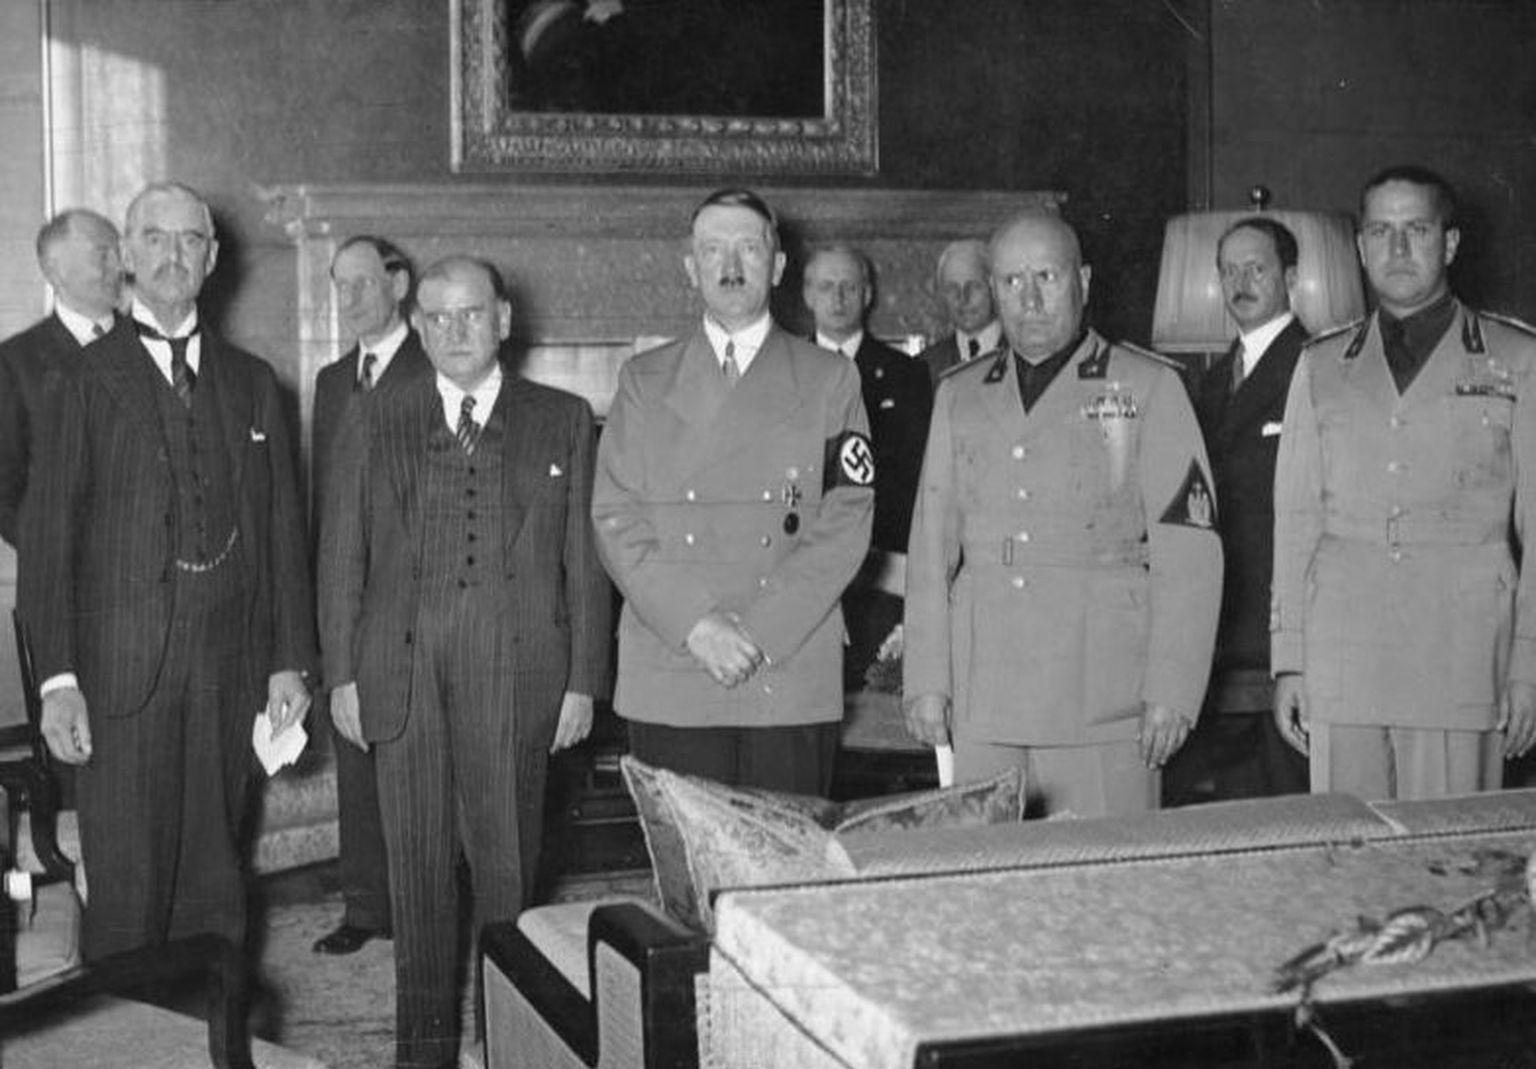 Müncheni kokkuleppe sõlmimine 30.september 1938. Keskel Adolf Hitler ja vasakul ääres Neville Chamberlain